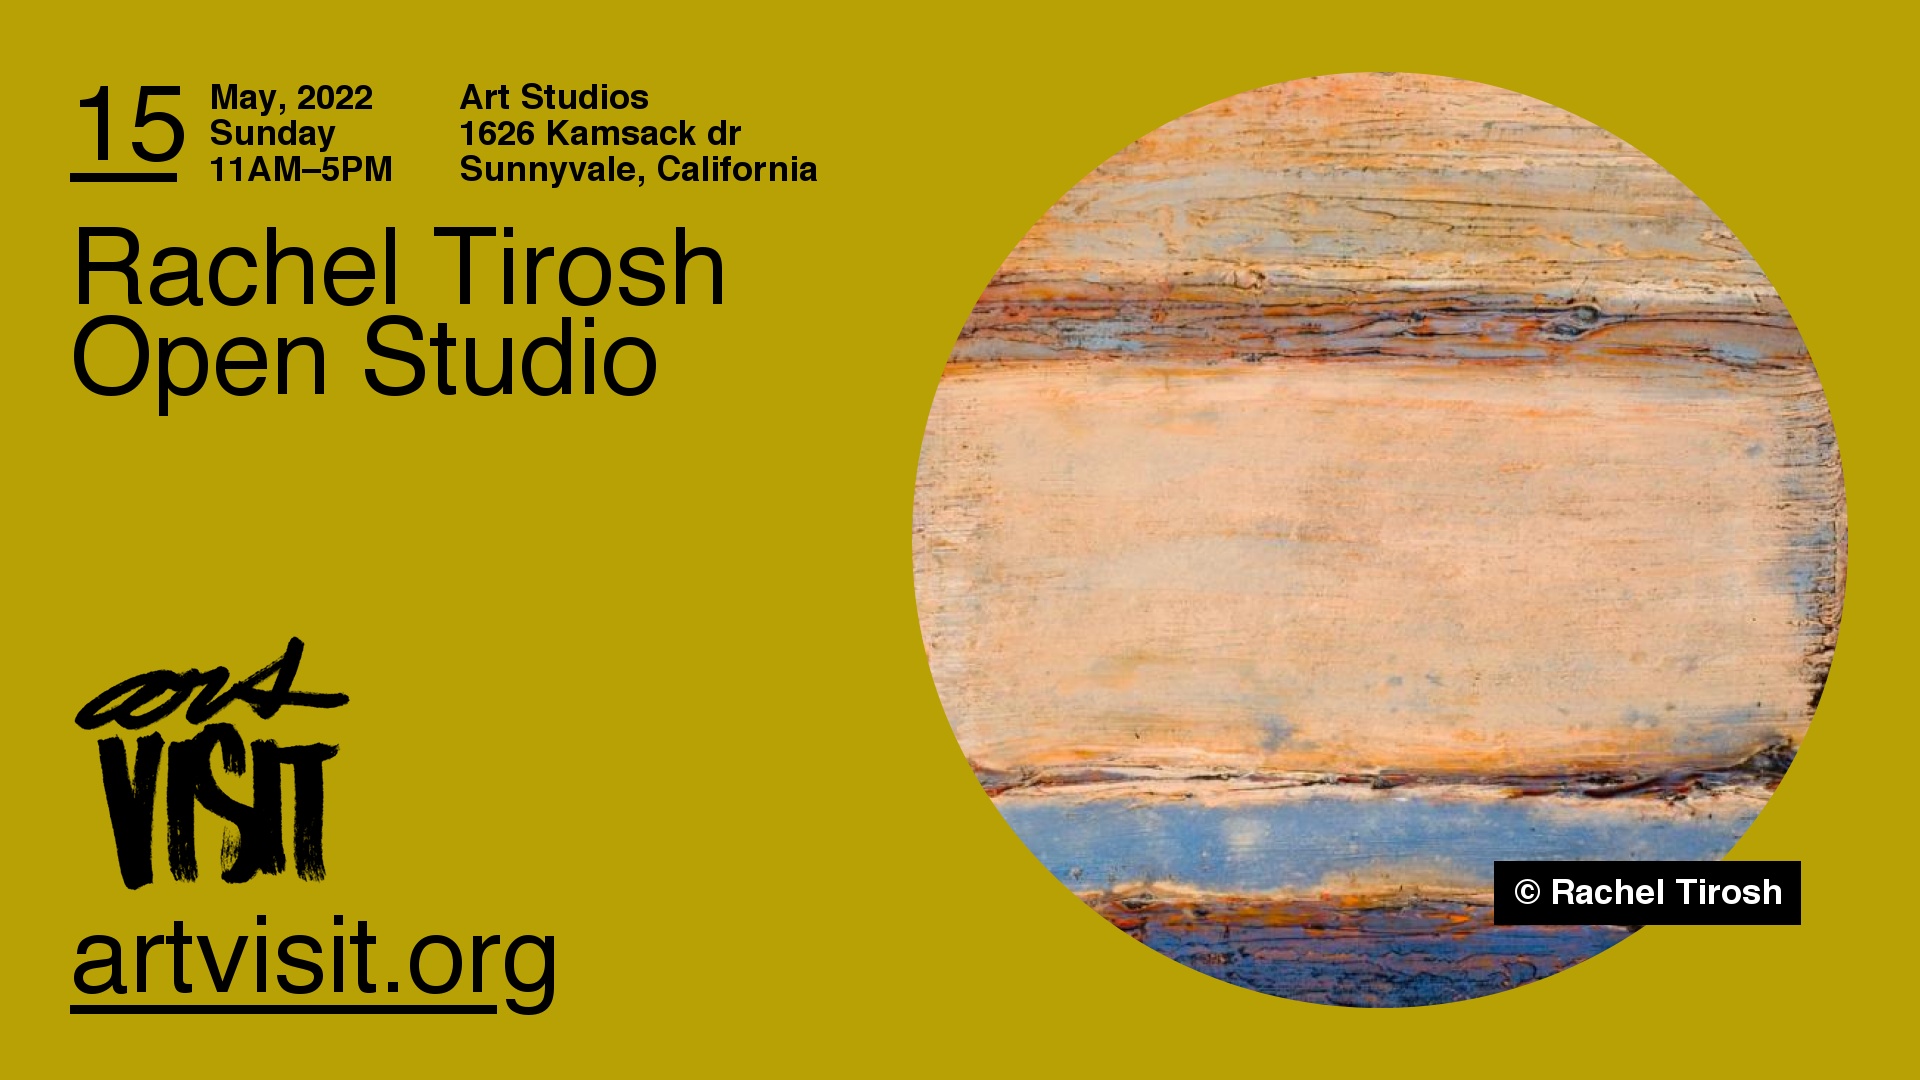 Rachel Tirosh Open Studio